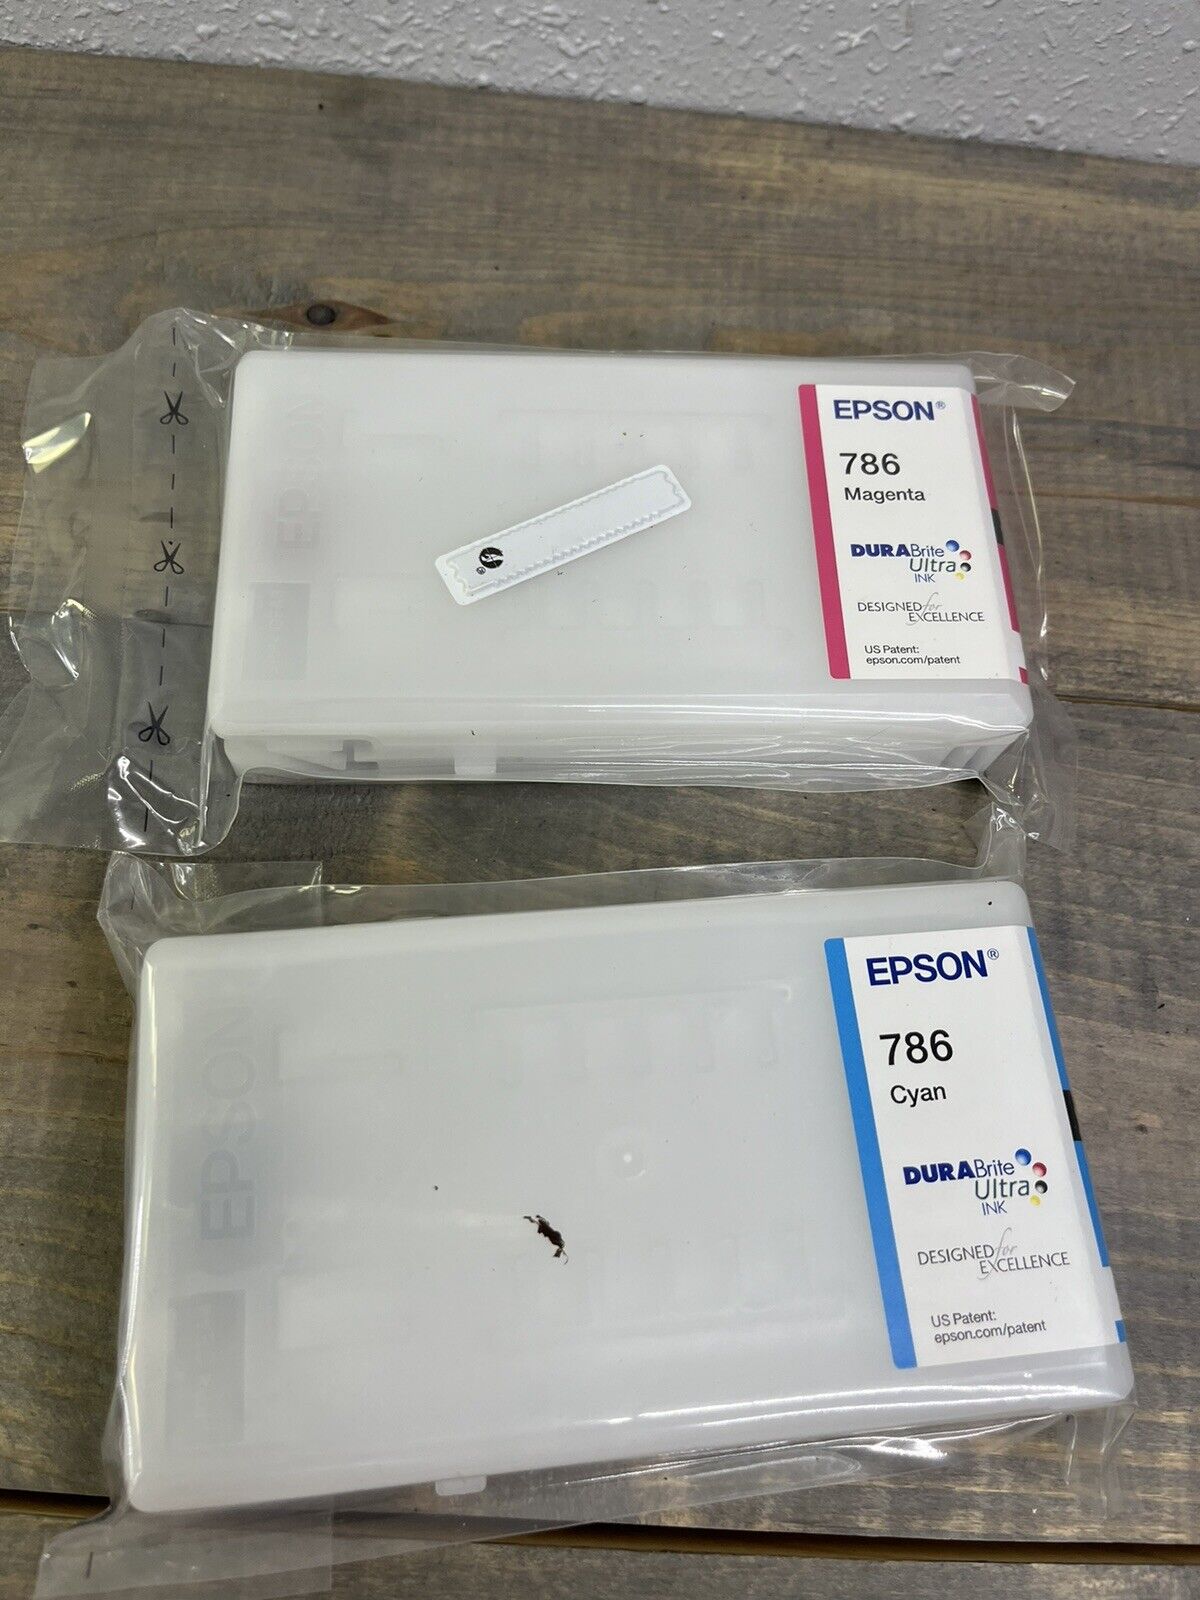 Epson 786 Cartridge DuraBrite Ultra Ink Cyan/Magenta (2 new)